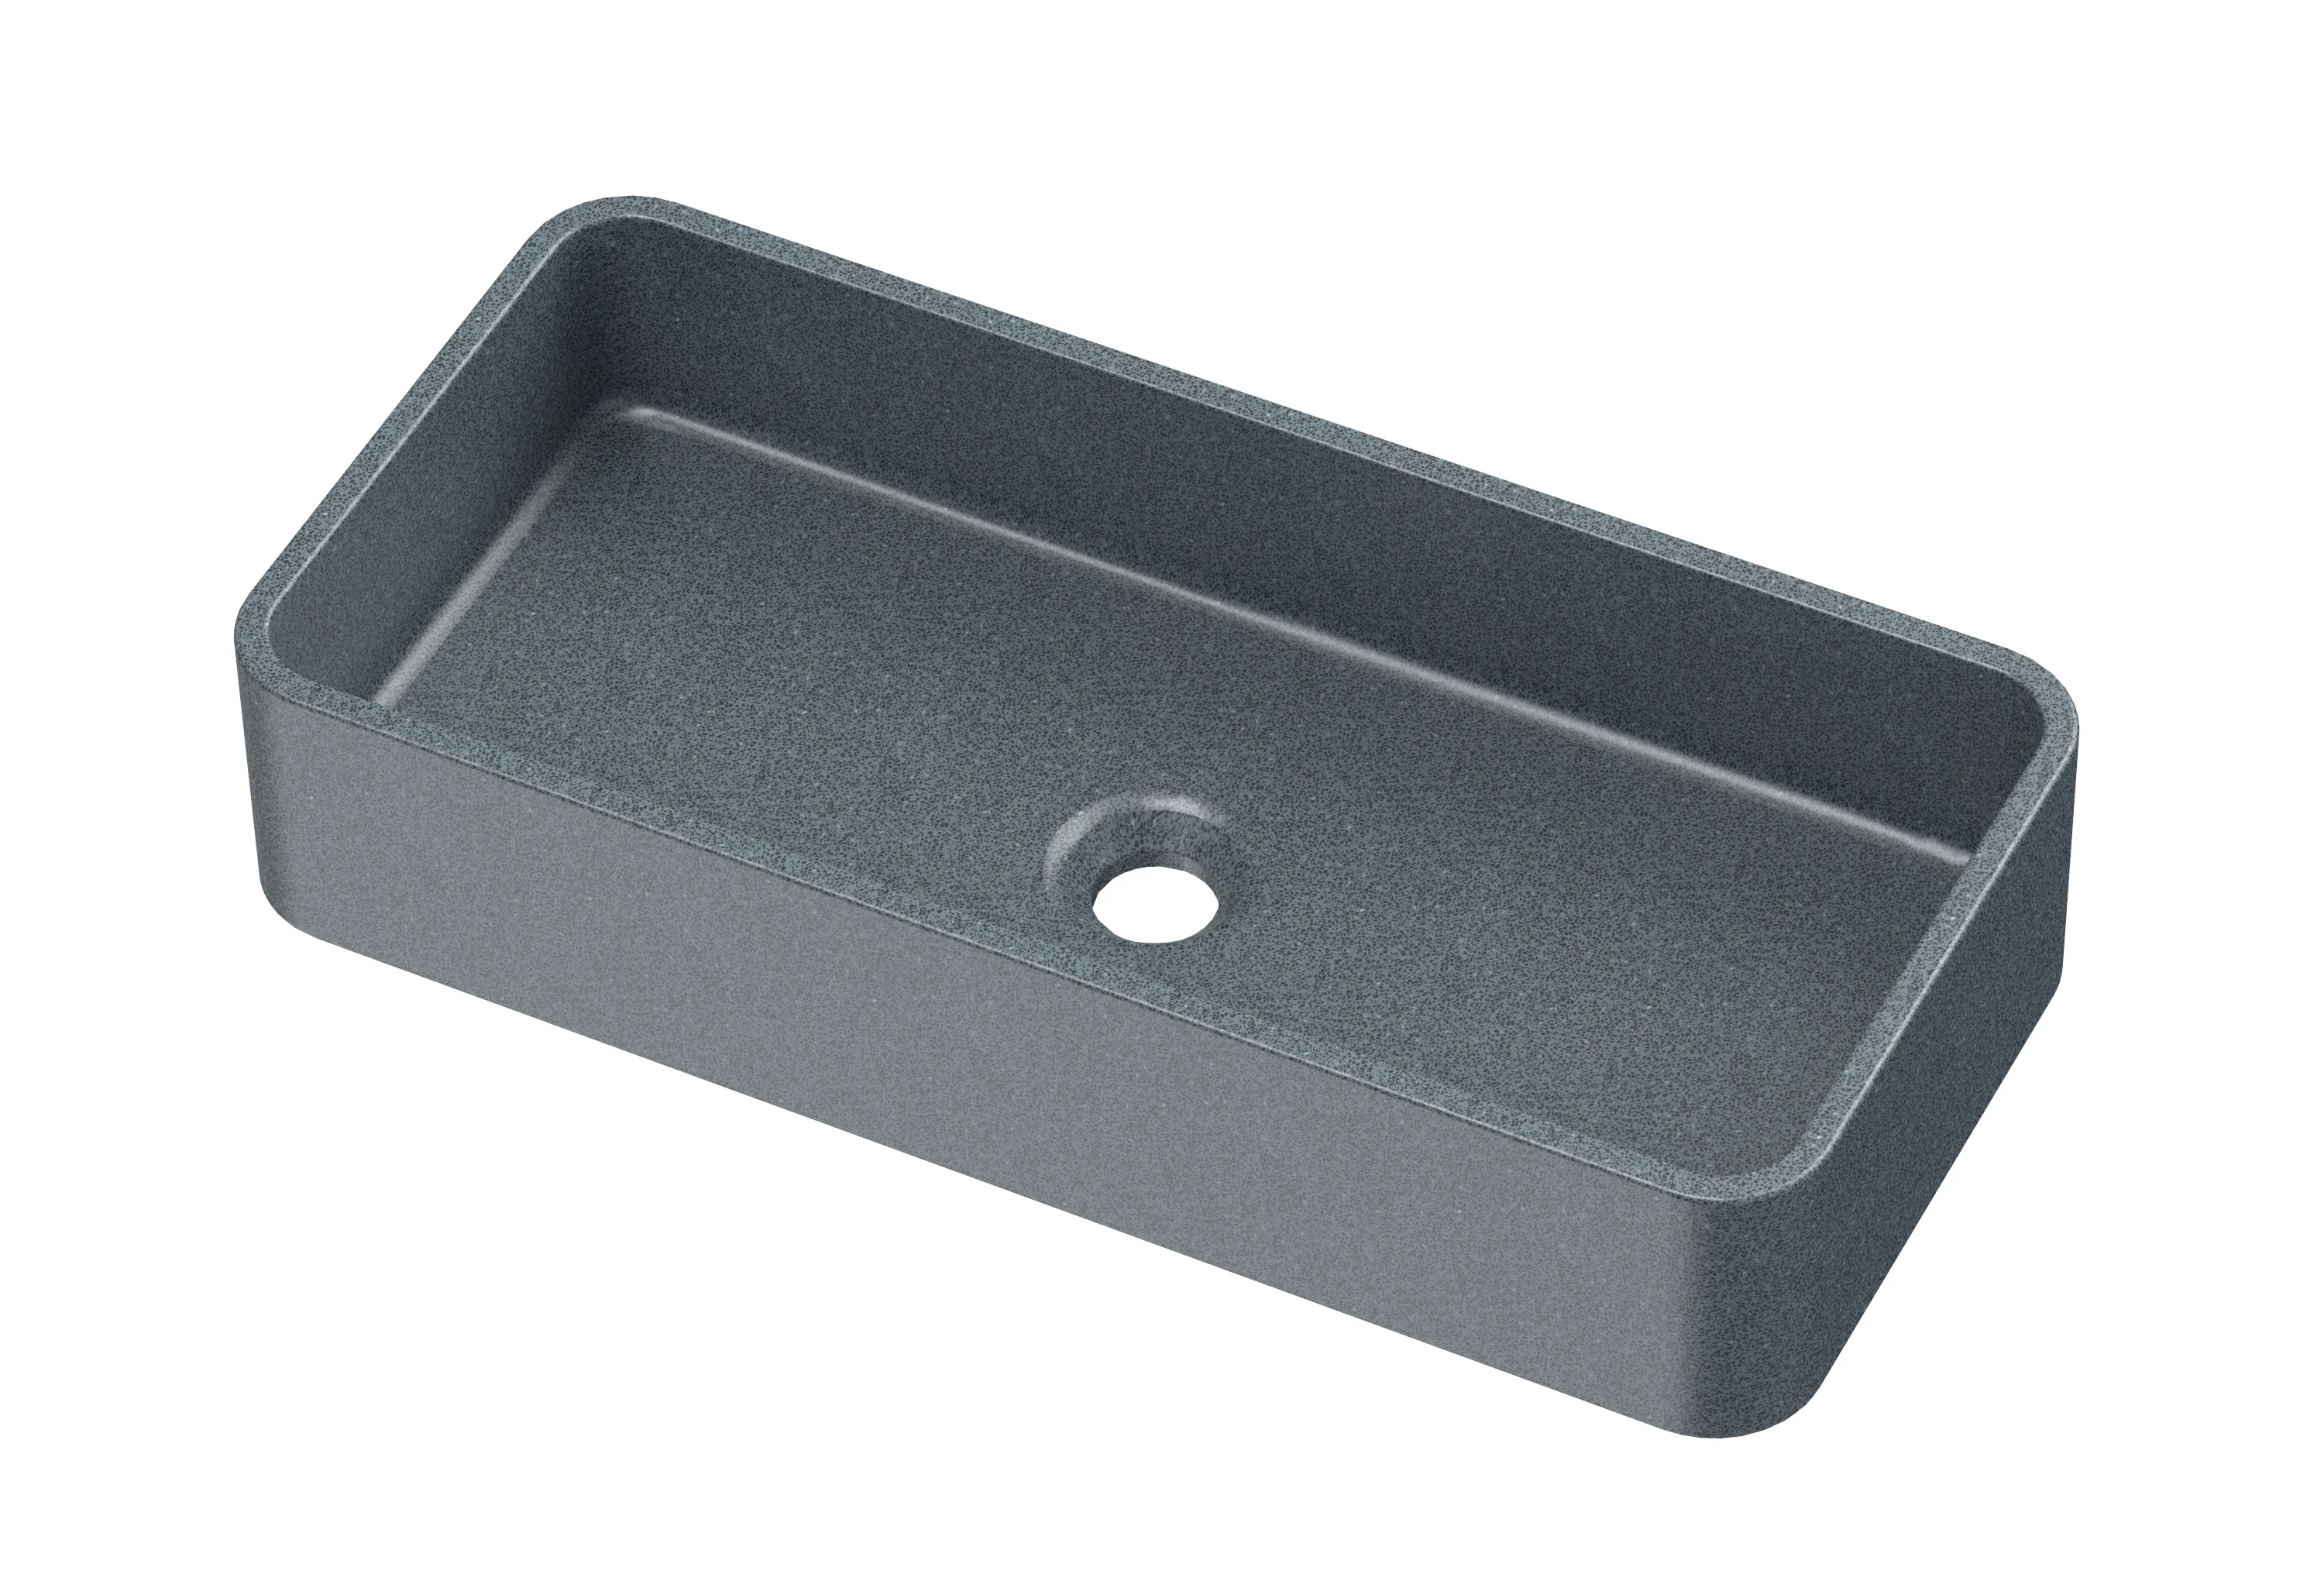 CONRAZZO rectangle shape terrazzo wash basin bathroom counter sink bathroom wash basin designs basin